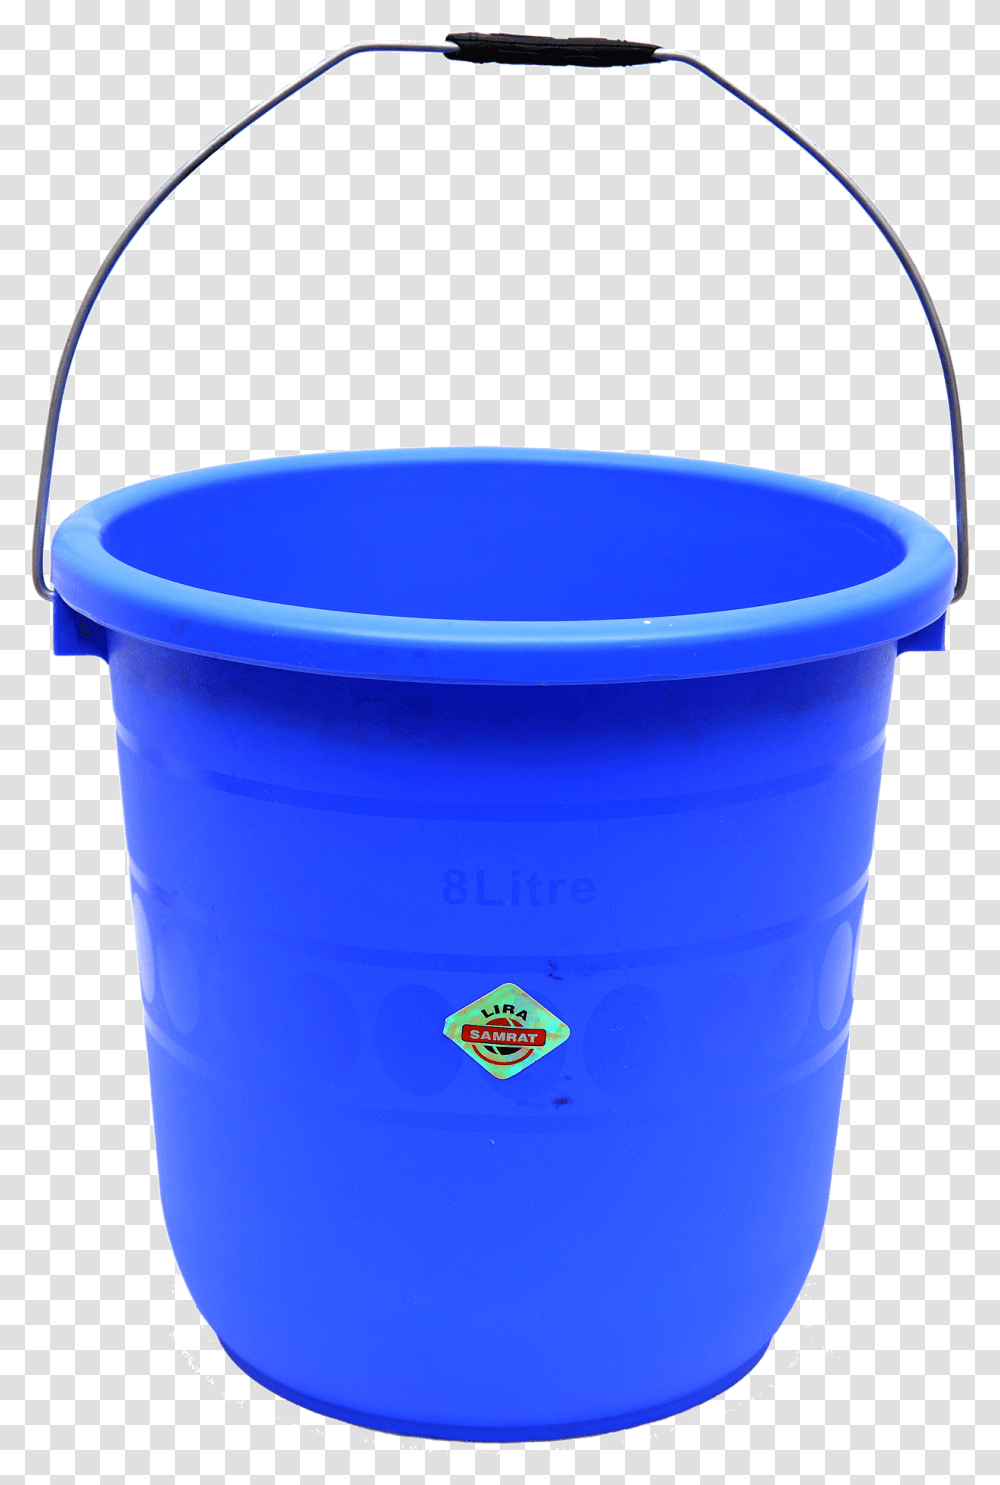 Plastic Bucket Free Image Plastic Bucket, Bathtub Transparent Png